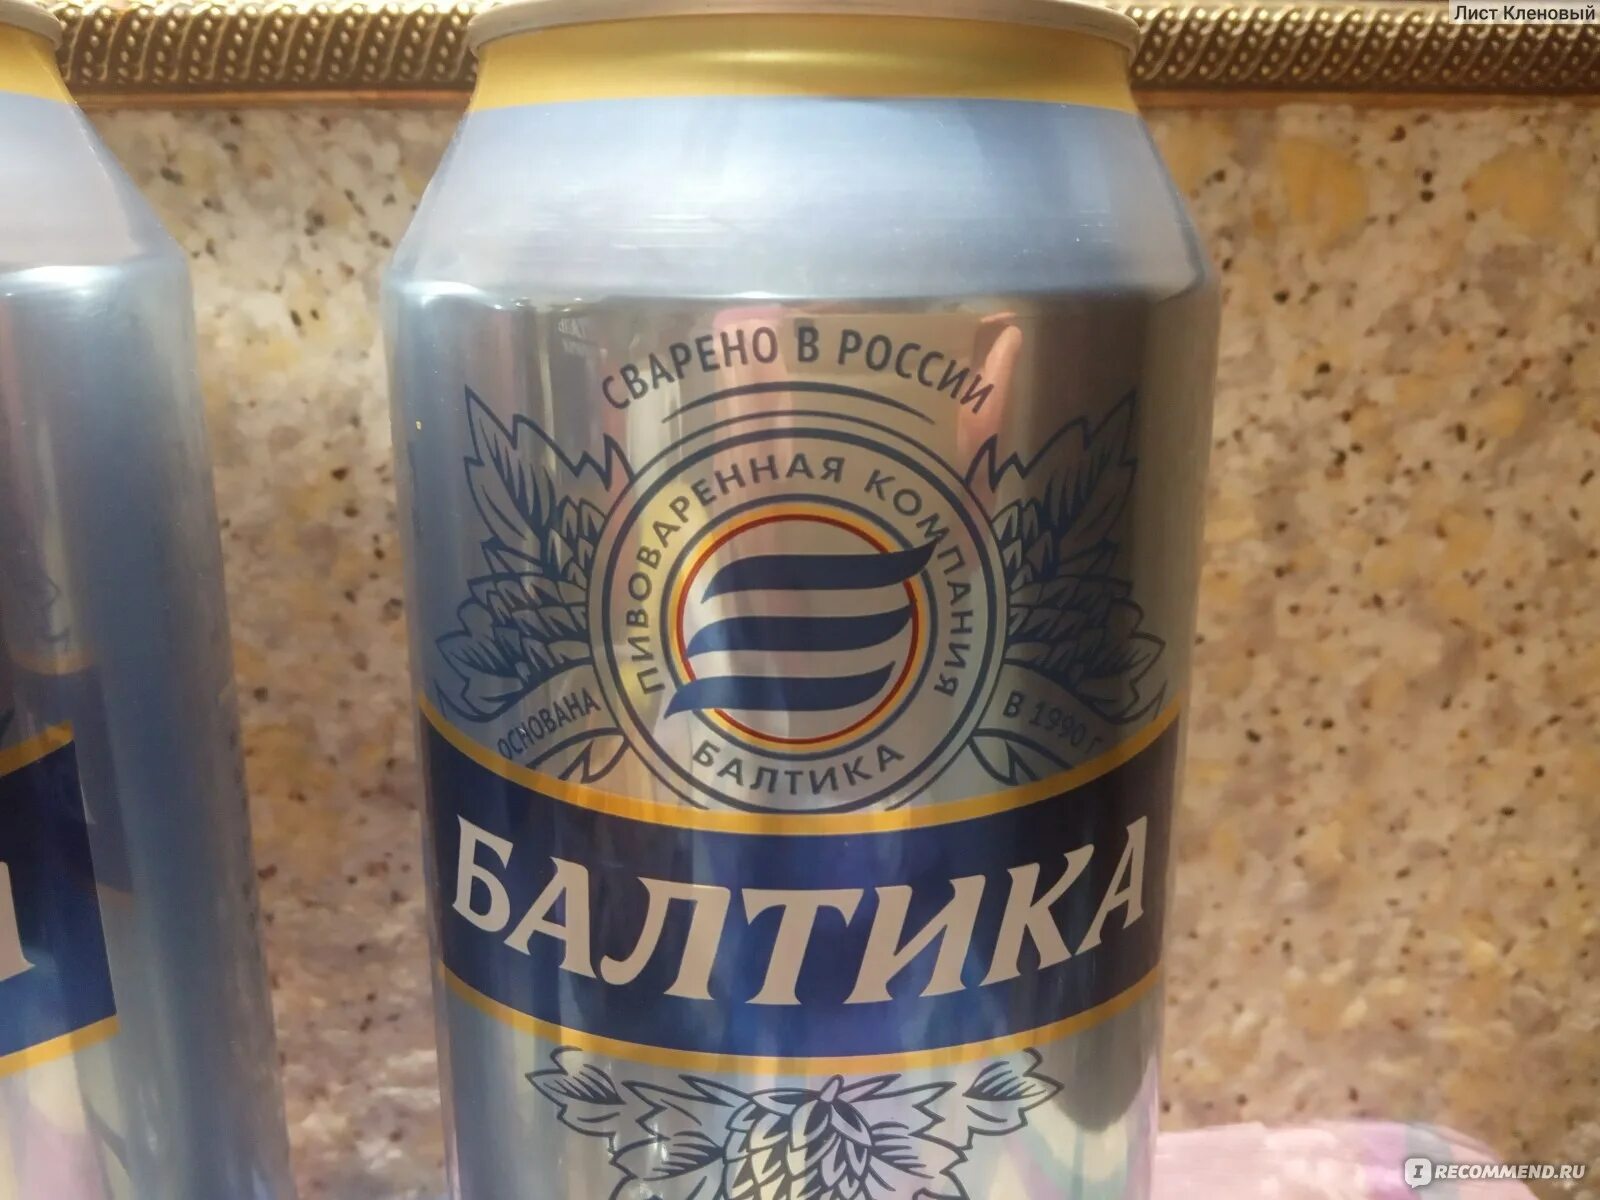 Новая балтика 7. Балтика 7 пшеничное. Пиво Балтика 7. Пиво Балтика 7 мягкое. Балтика 7 мягкое упаковка.